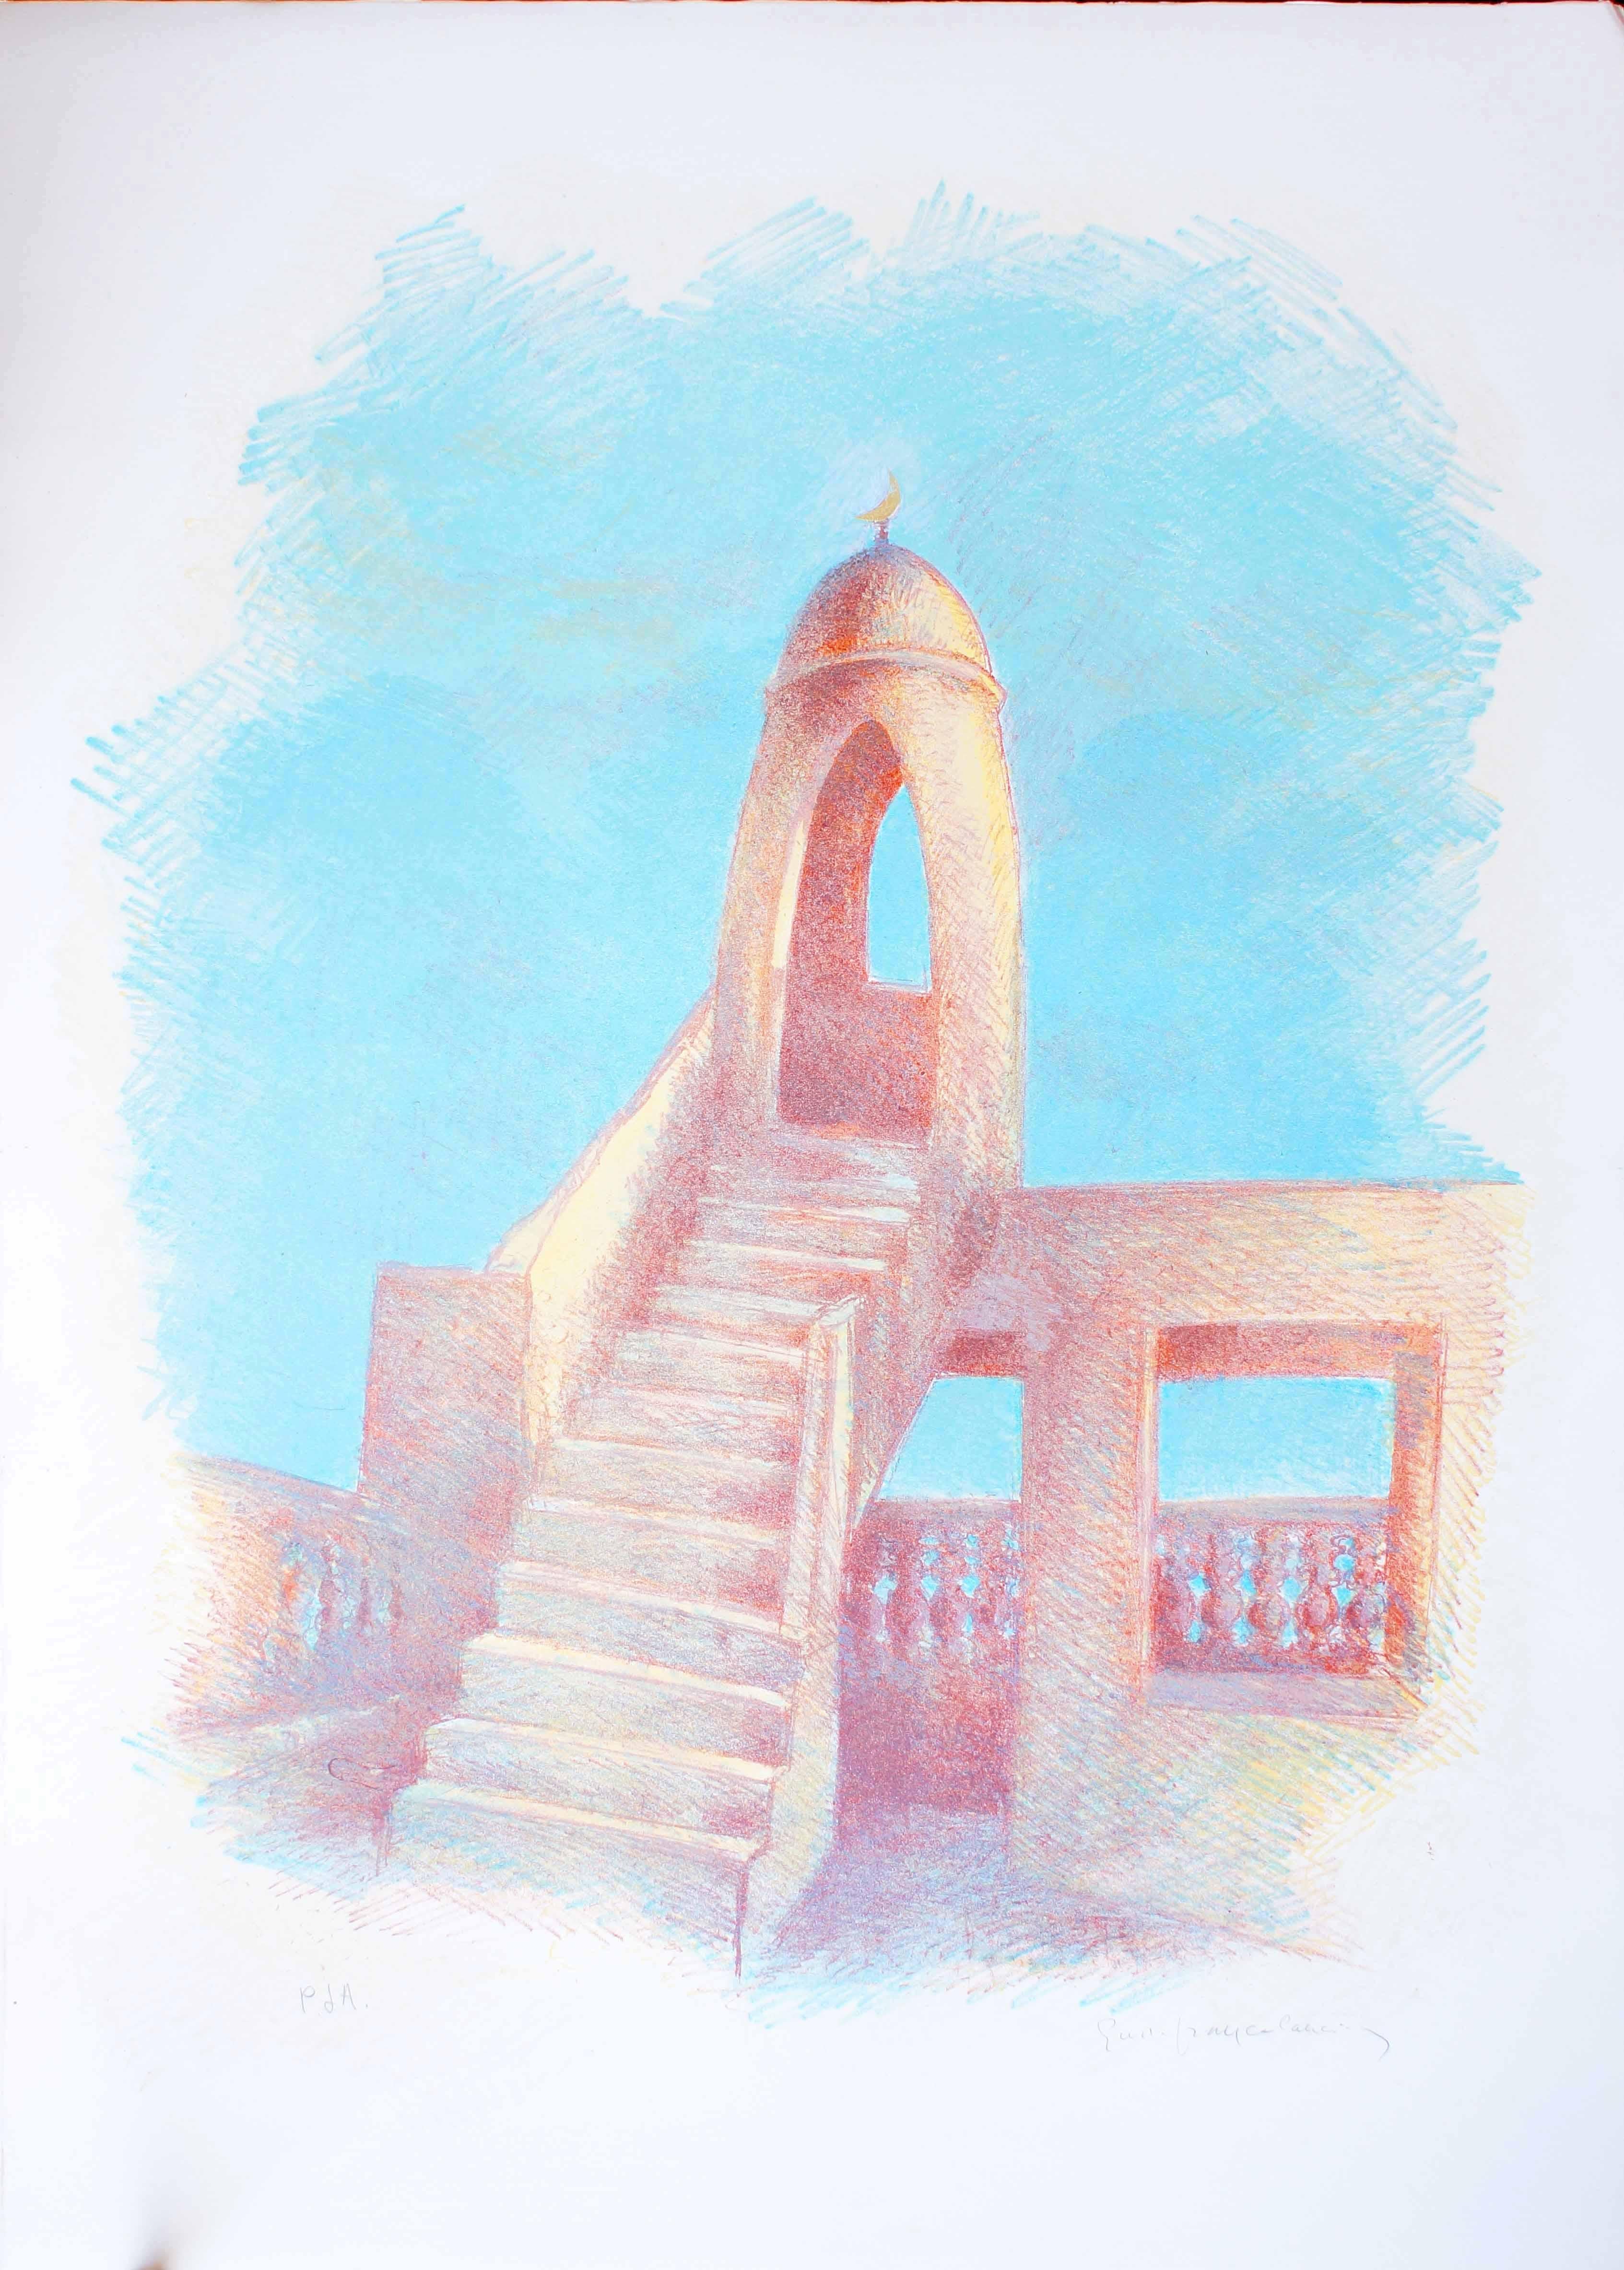 Islamic Tower - Original Lithograph by Gustavo Francalancia - 1970s